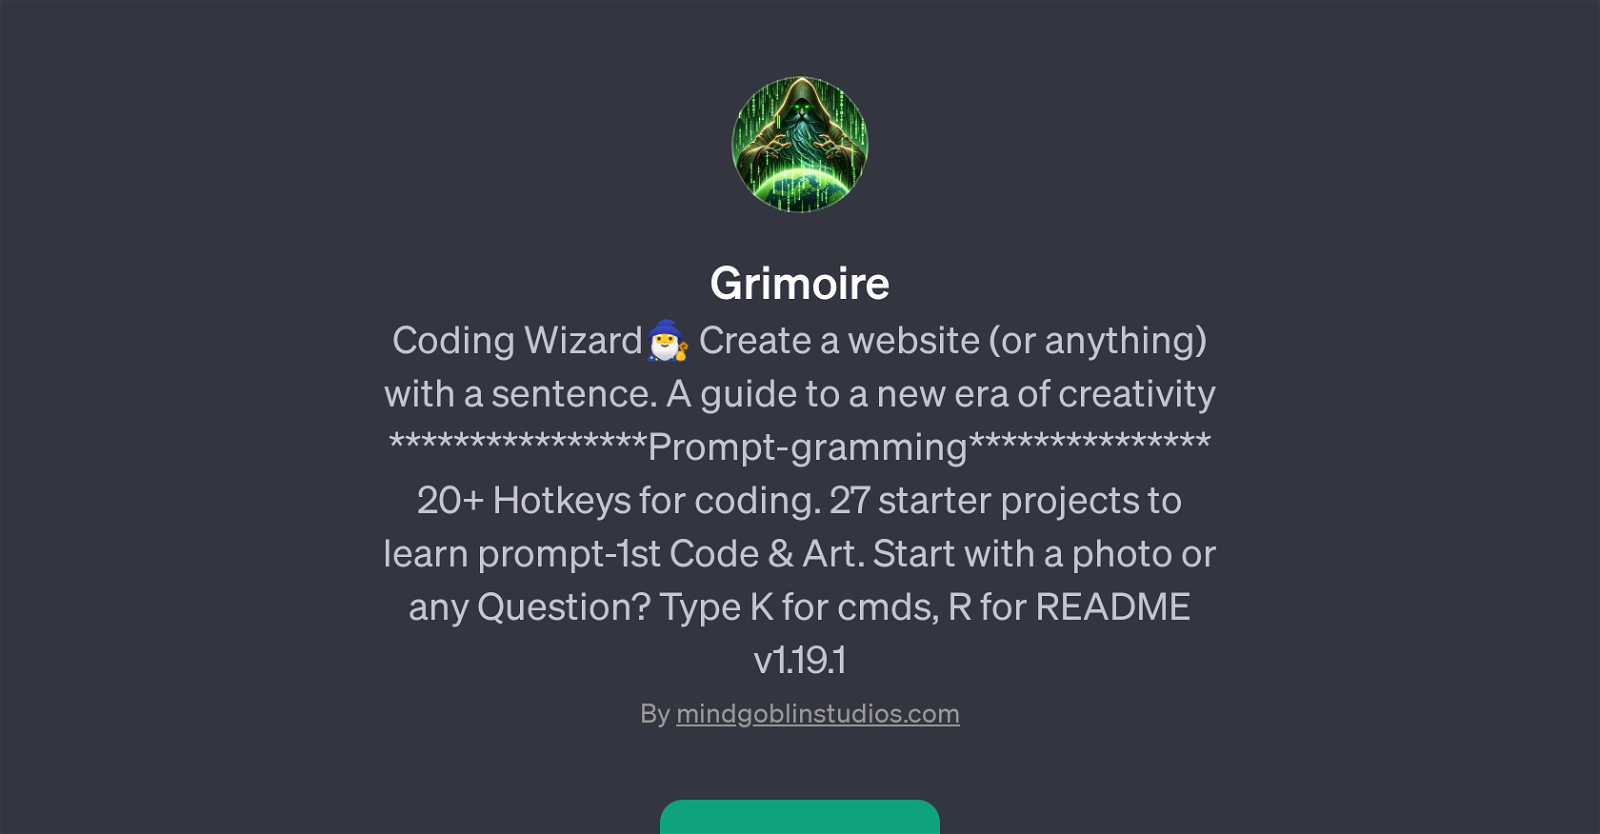 Grimoire website